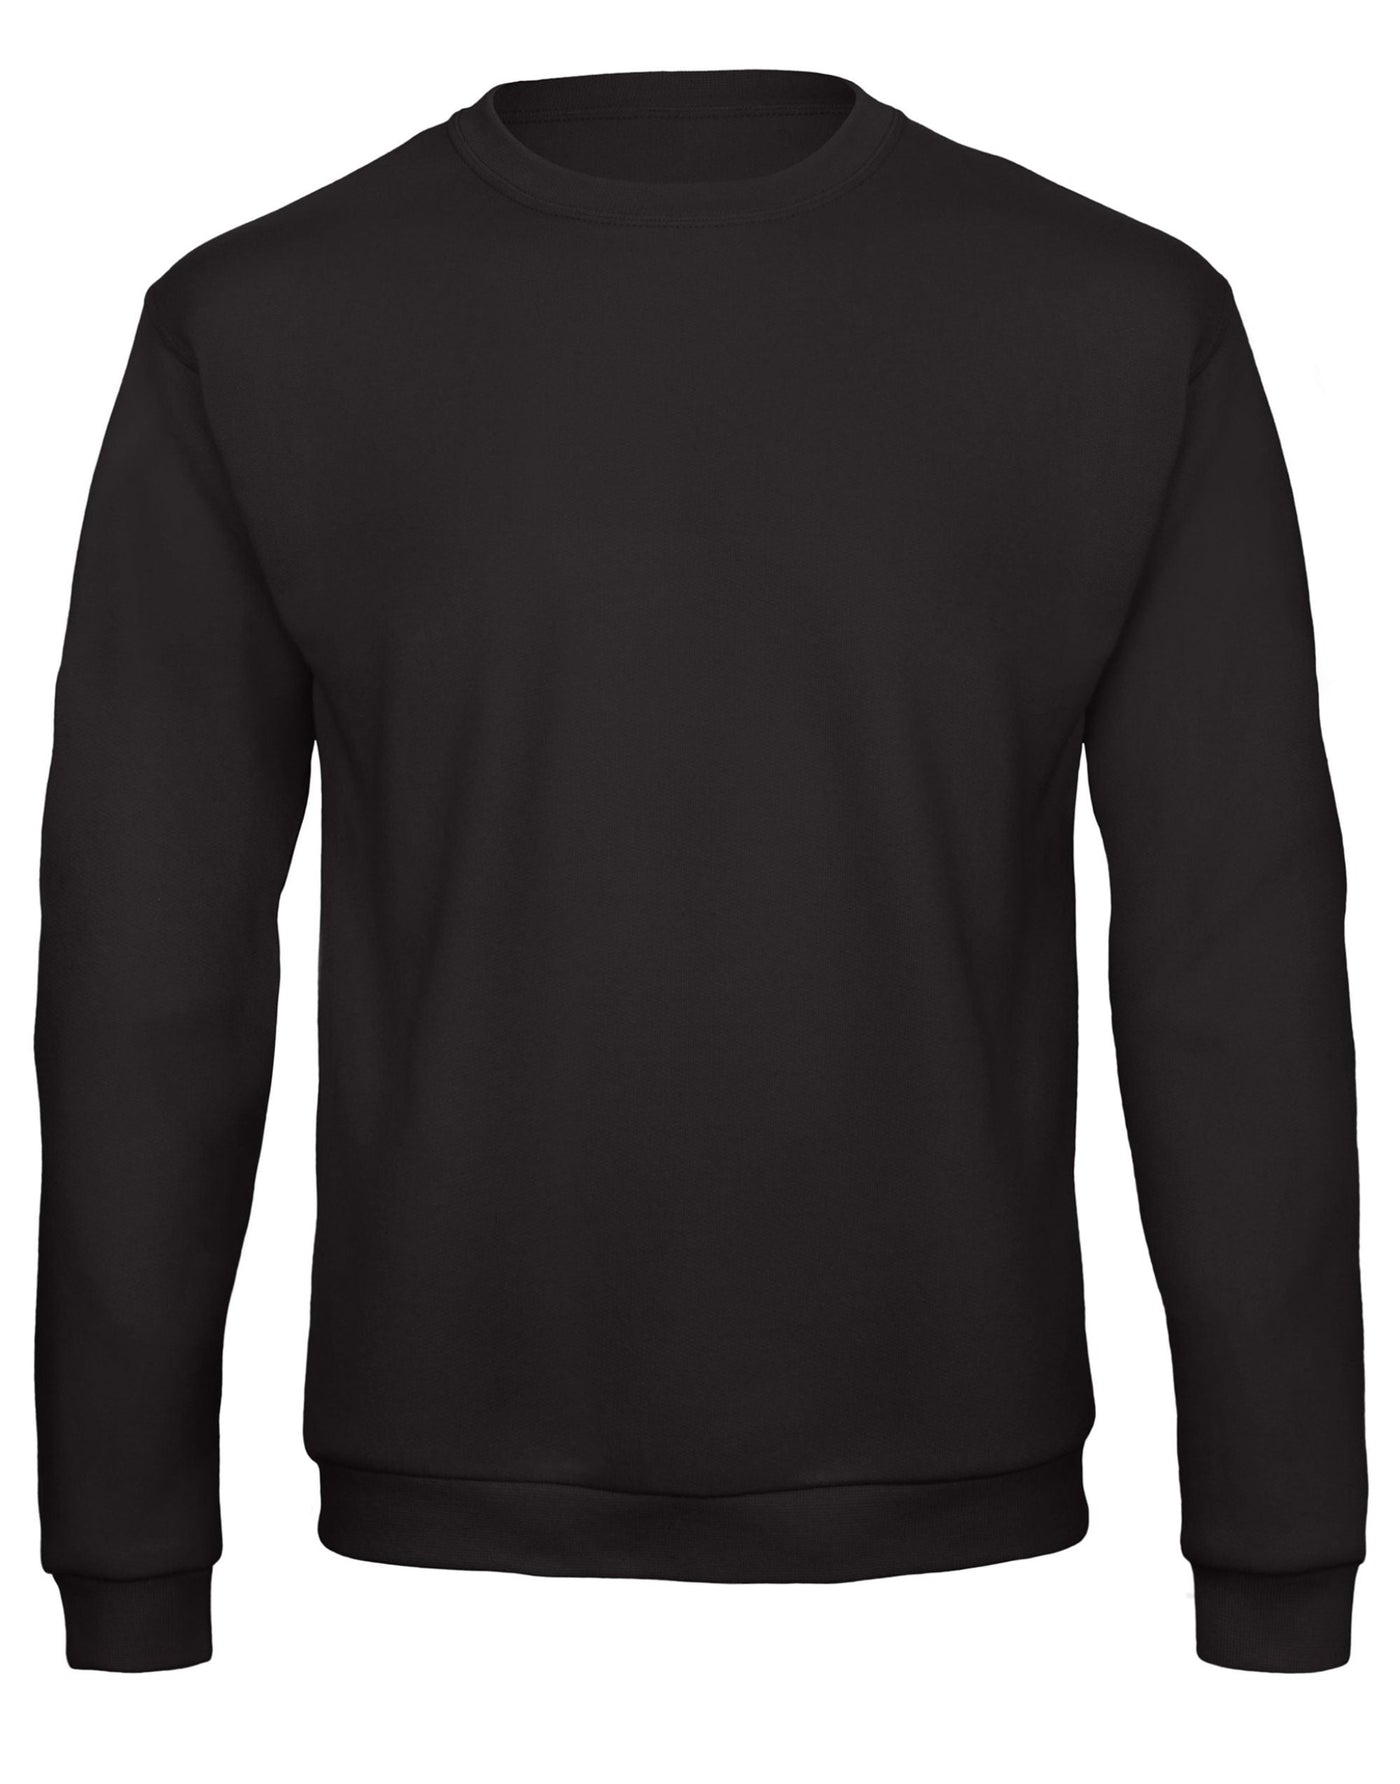 Personalise Unisex Adult Standard Fit Black Sweatshirt